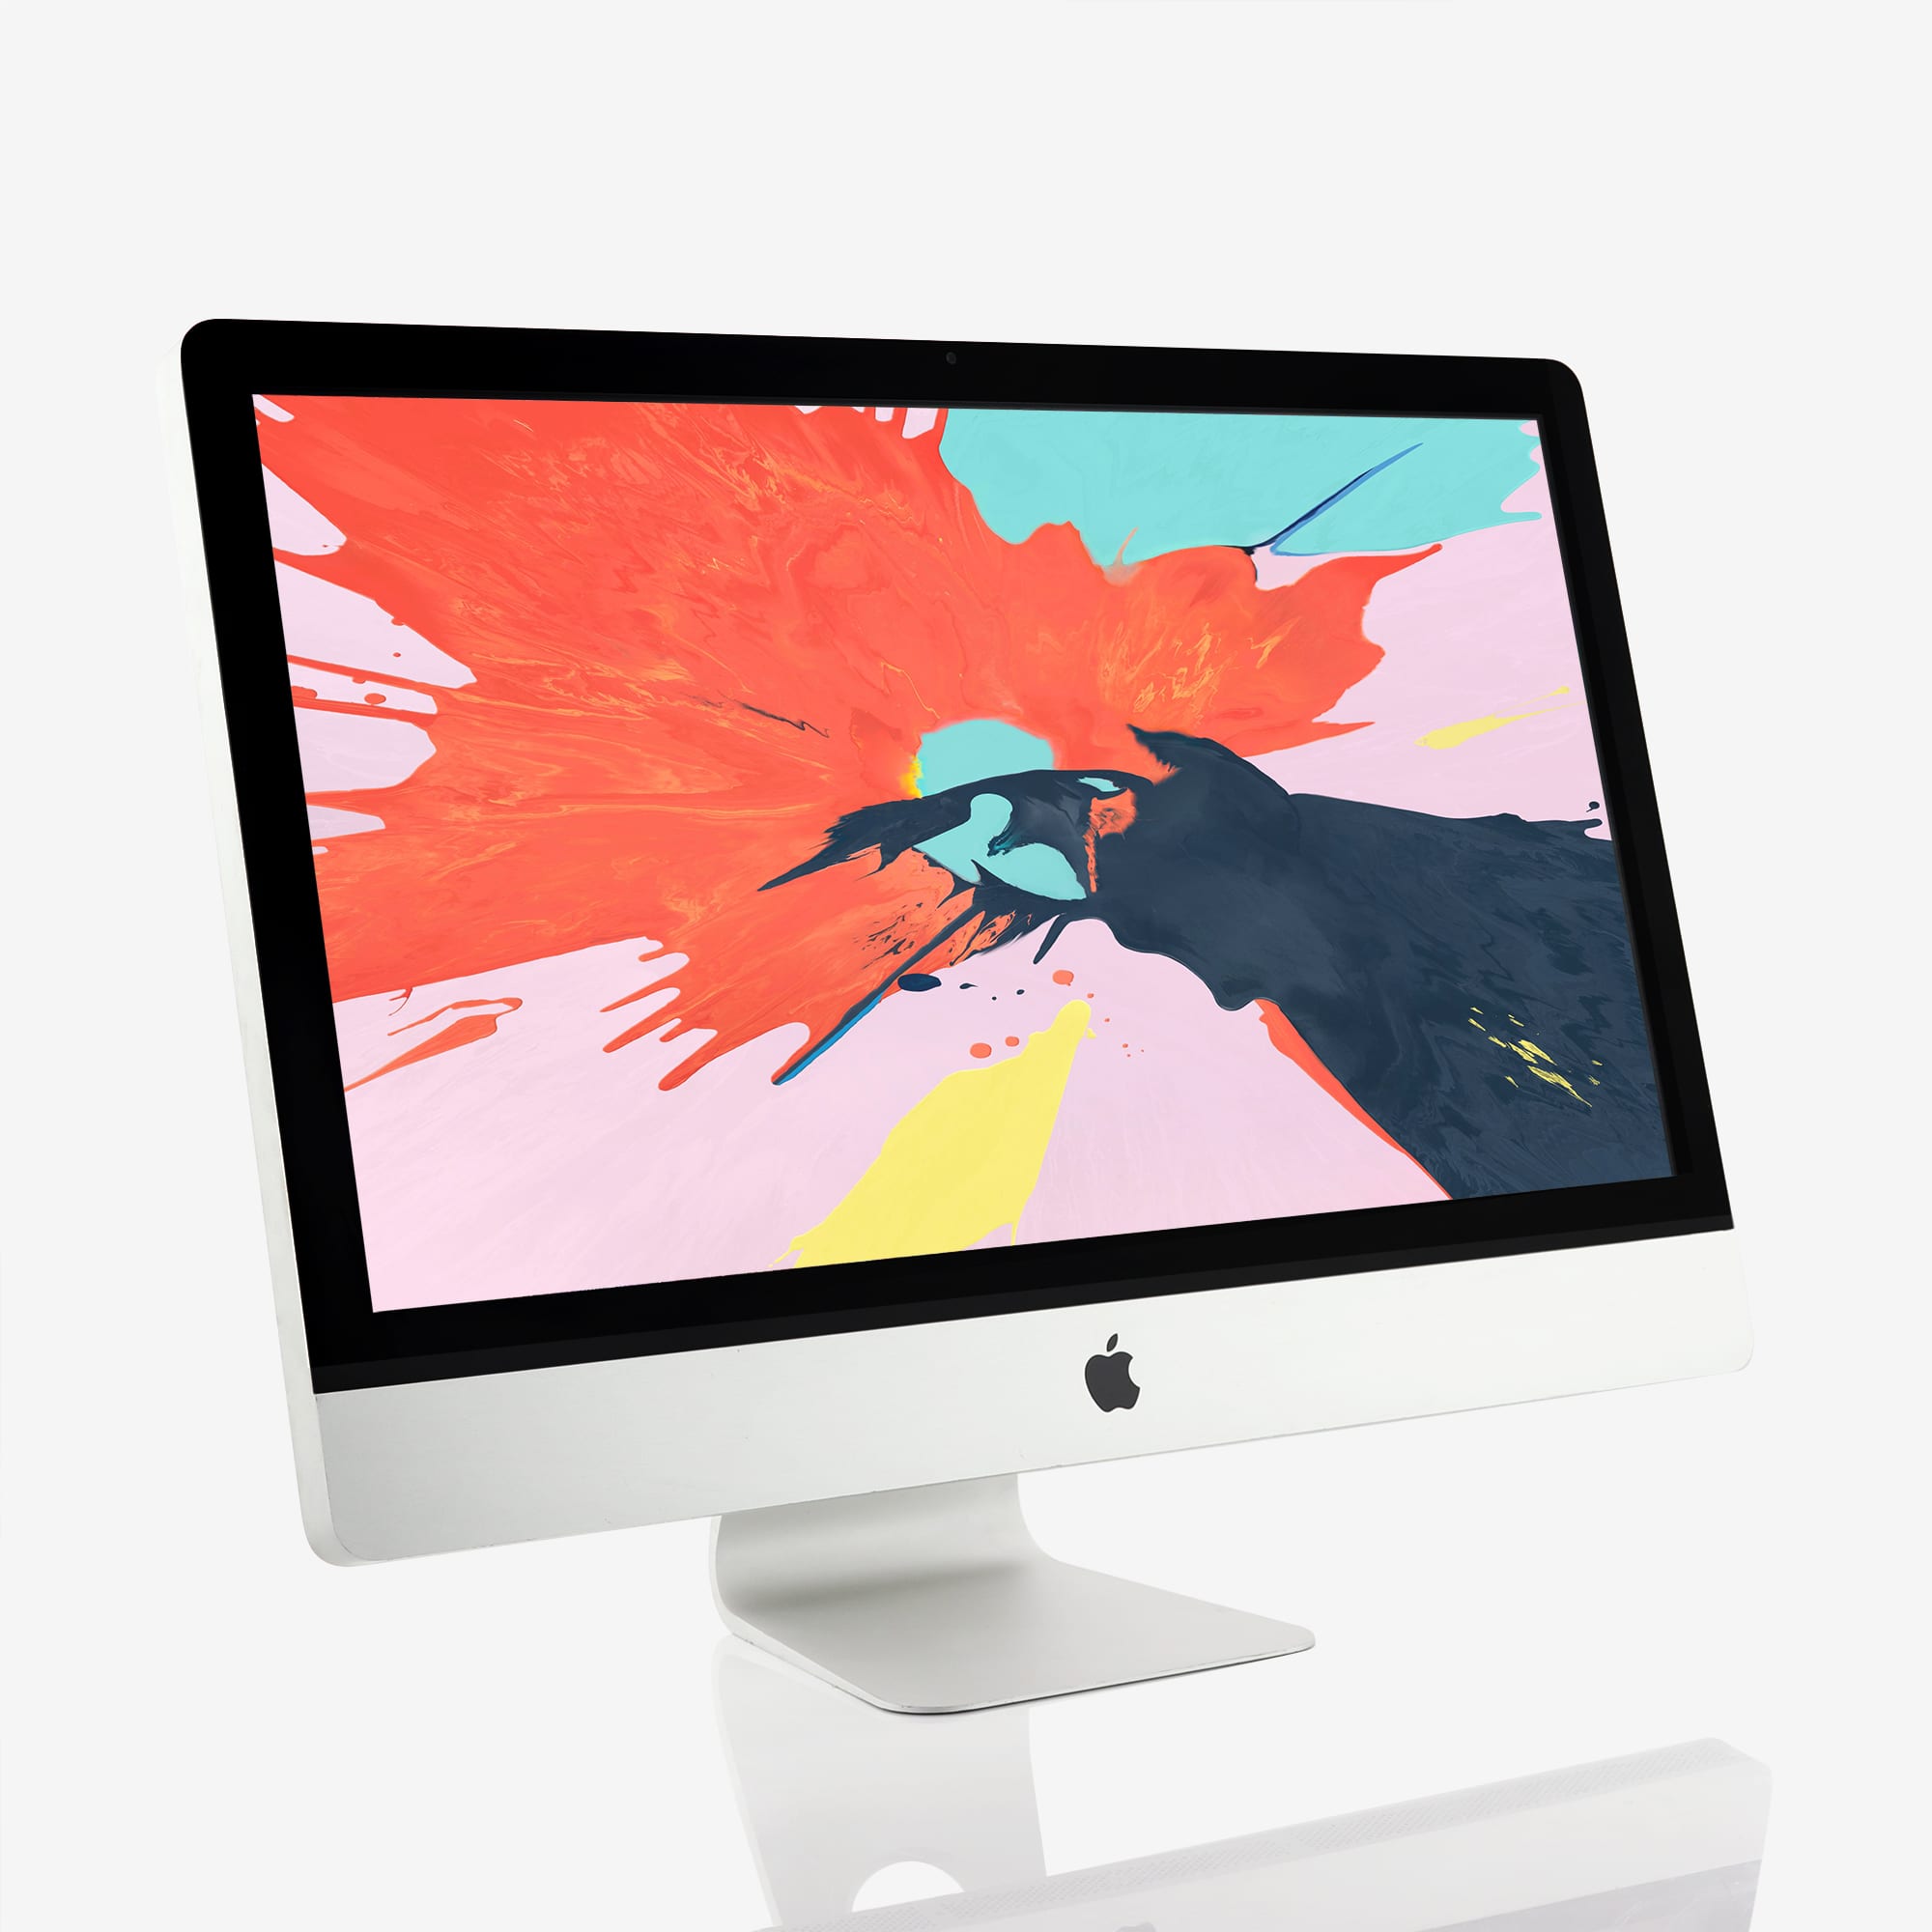 1 x Apple iMac 27 Inch Quad Core i5 2.80 GHz (2010)